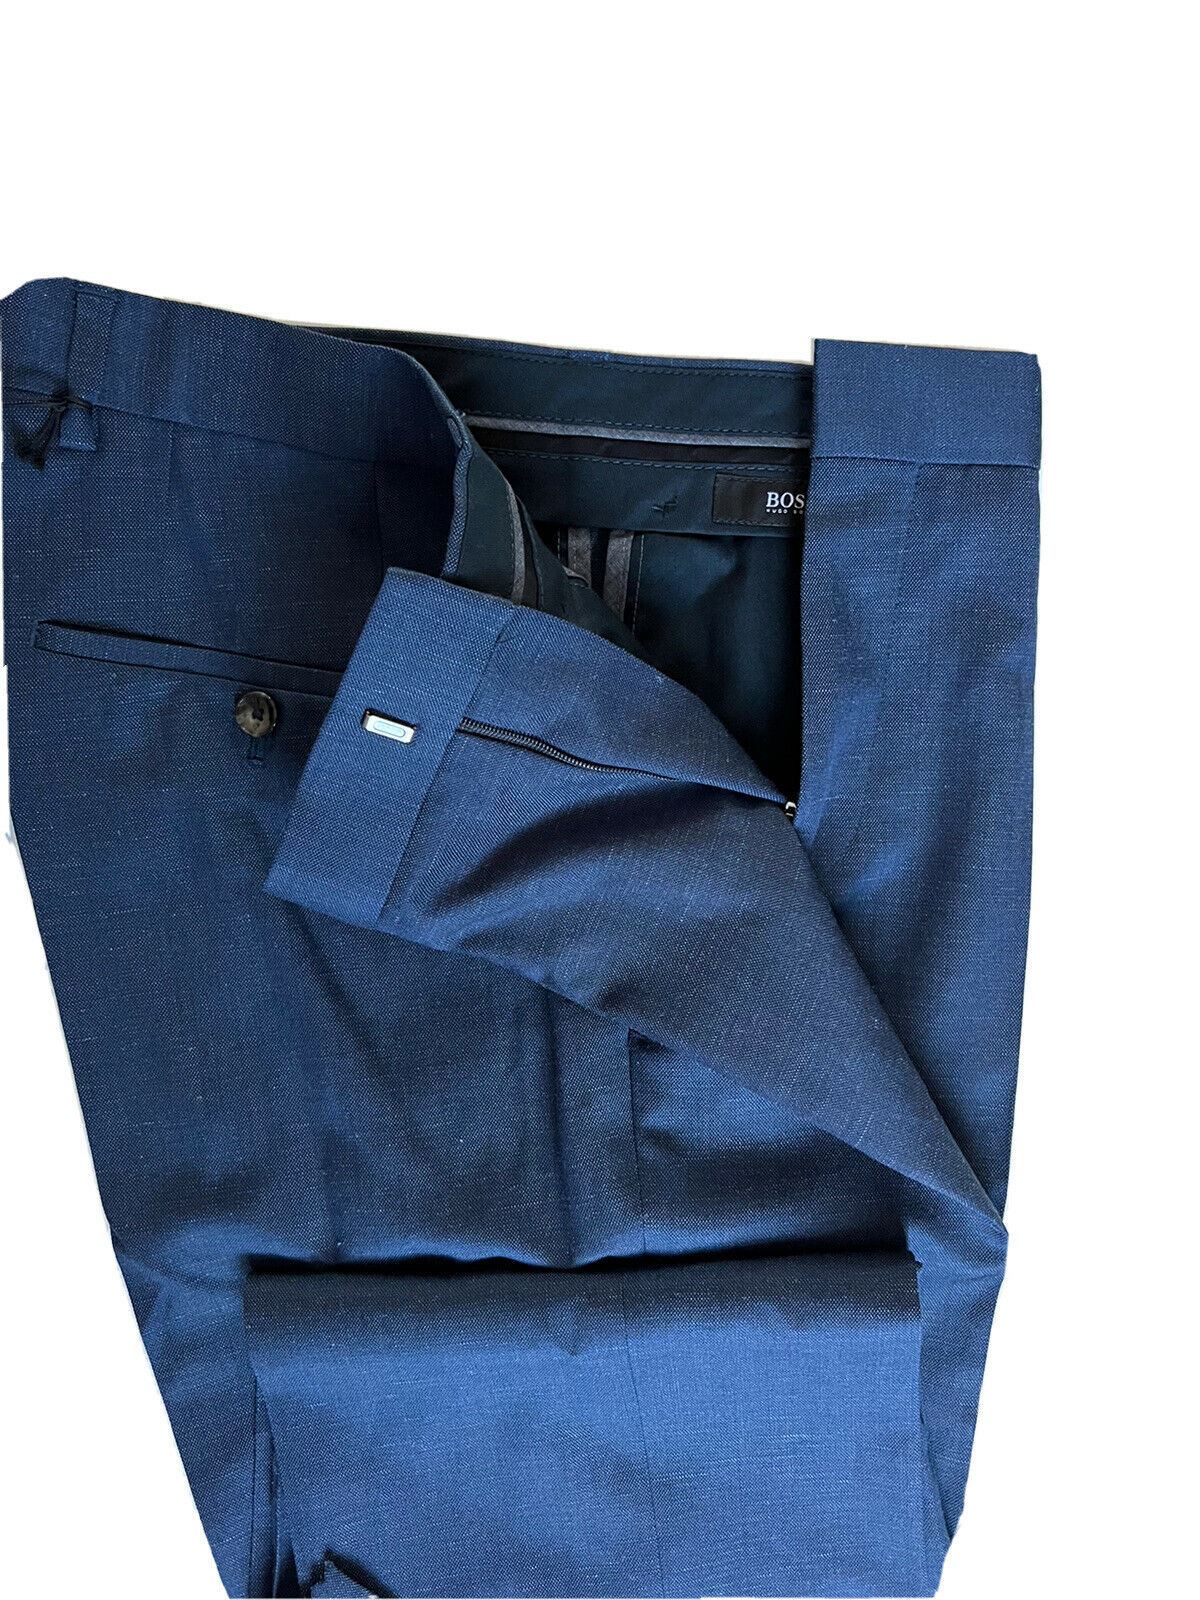 NWT $245 Boss Hugo Boss Genesis4 Men's Wool/Linen Blue Dress Pants Size 30 US